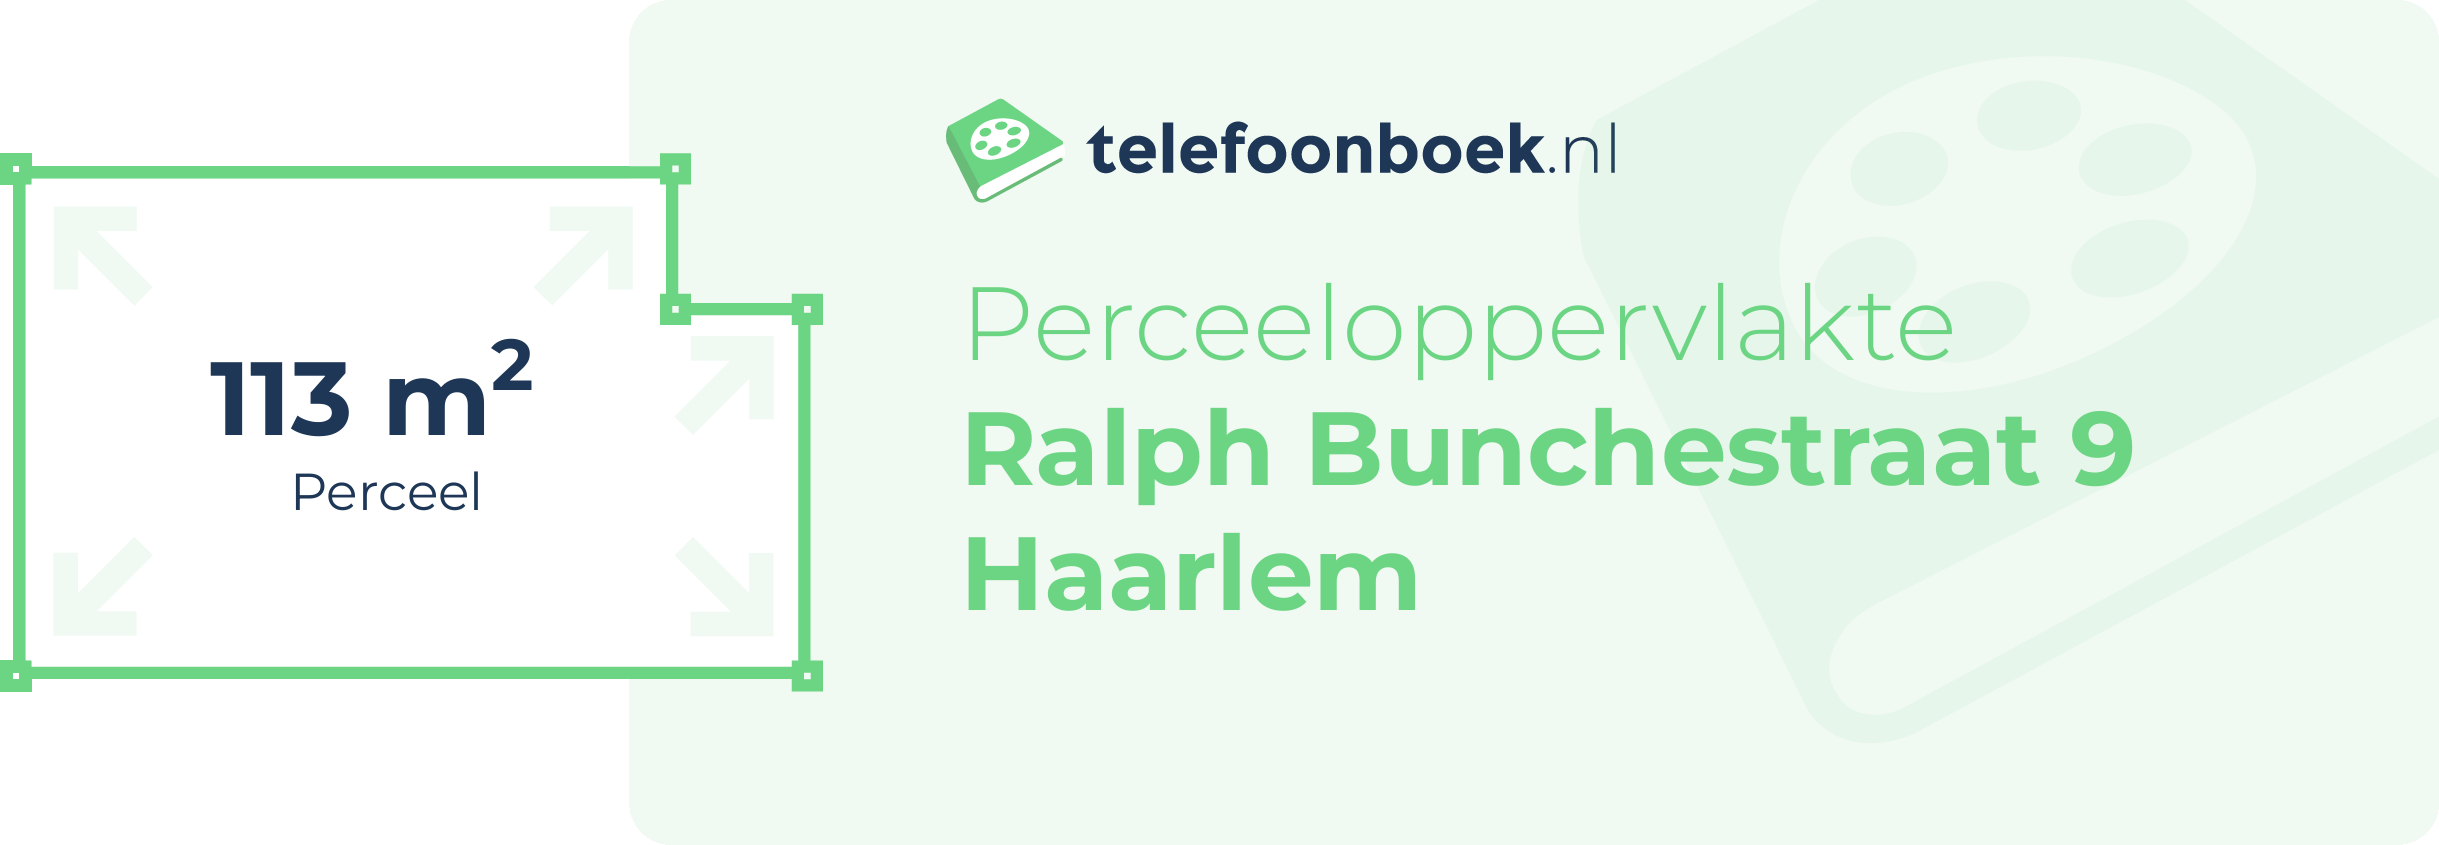 Perceeloppervlakte Ralph Bunchestraat 9 Haarlem